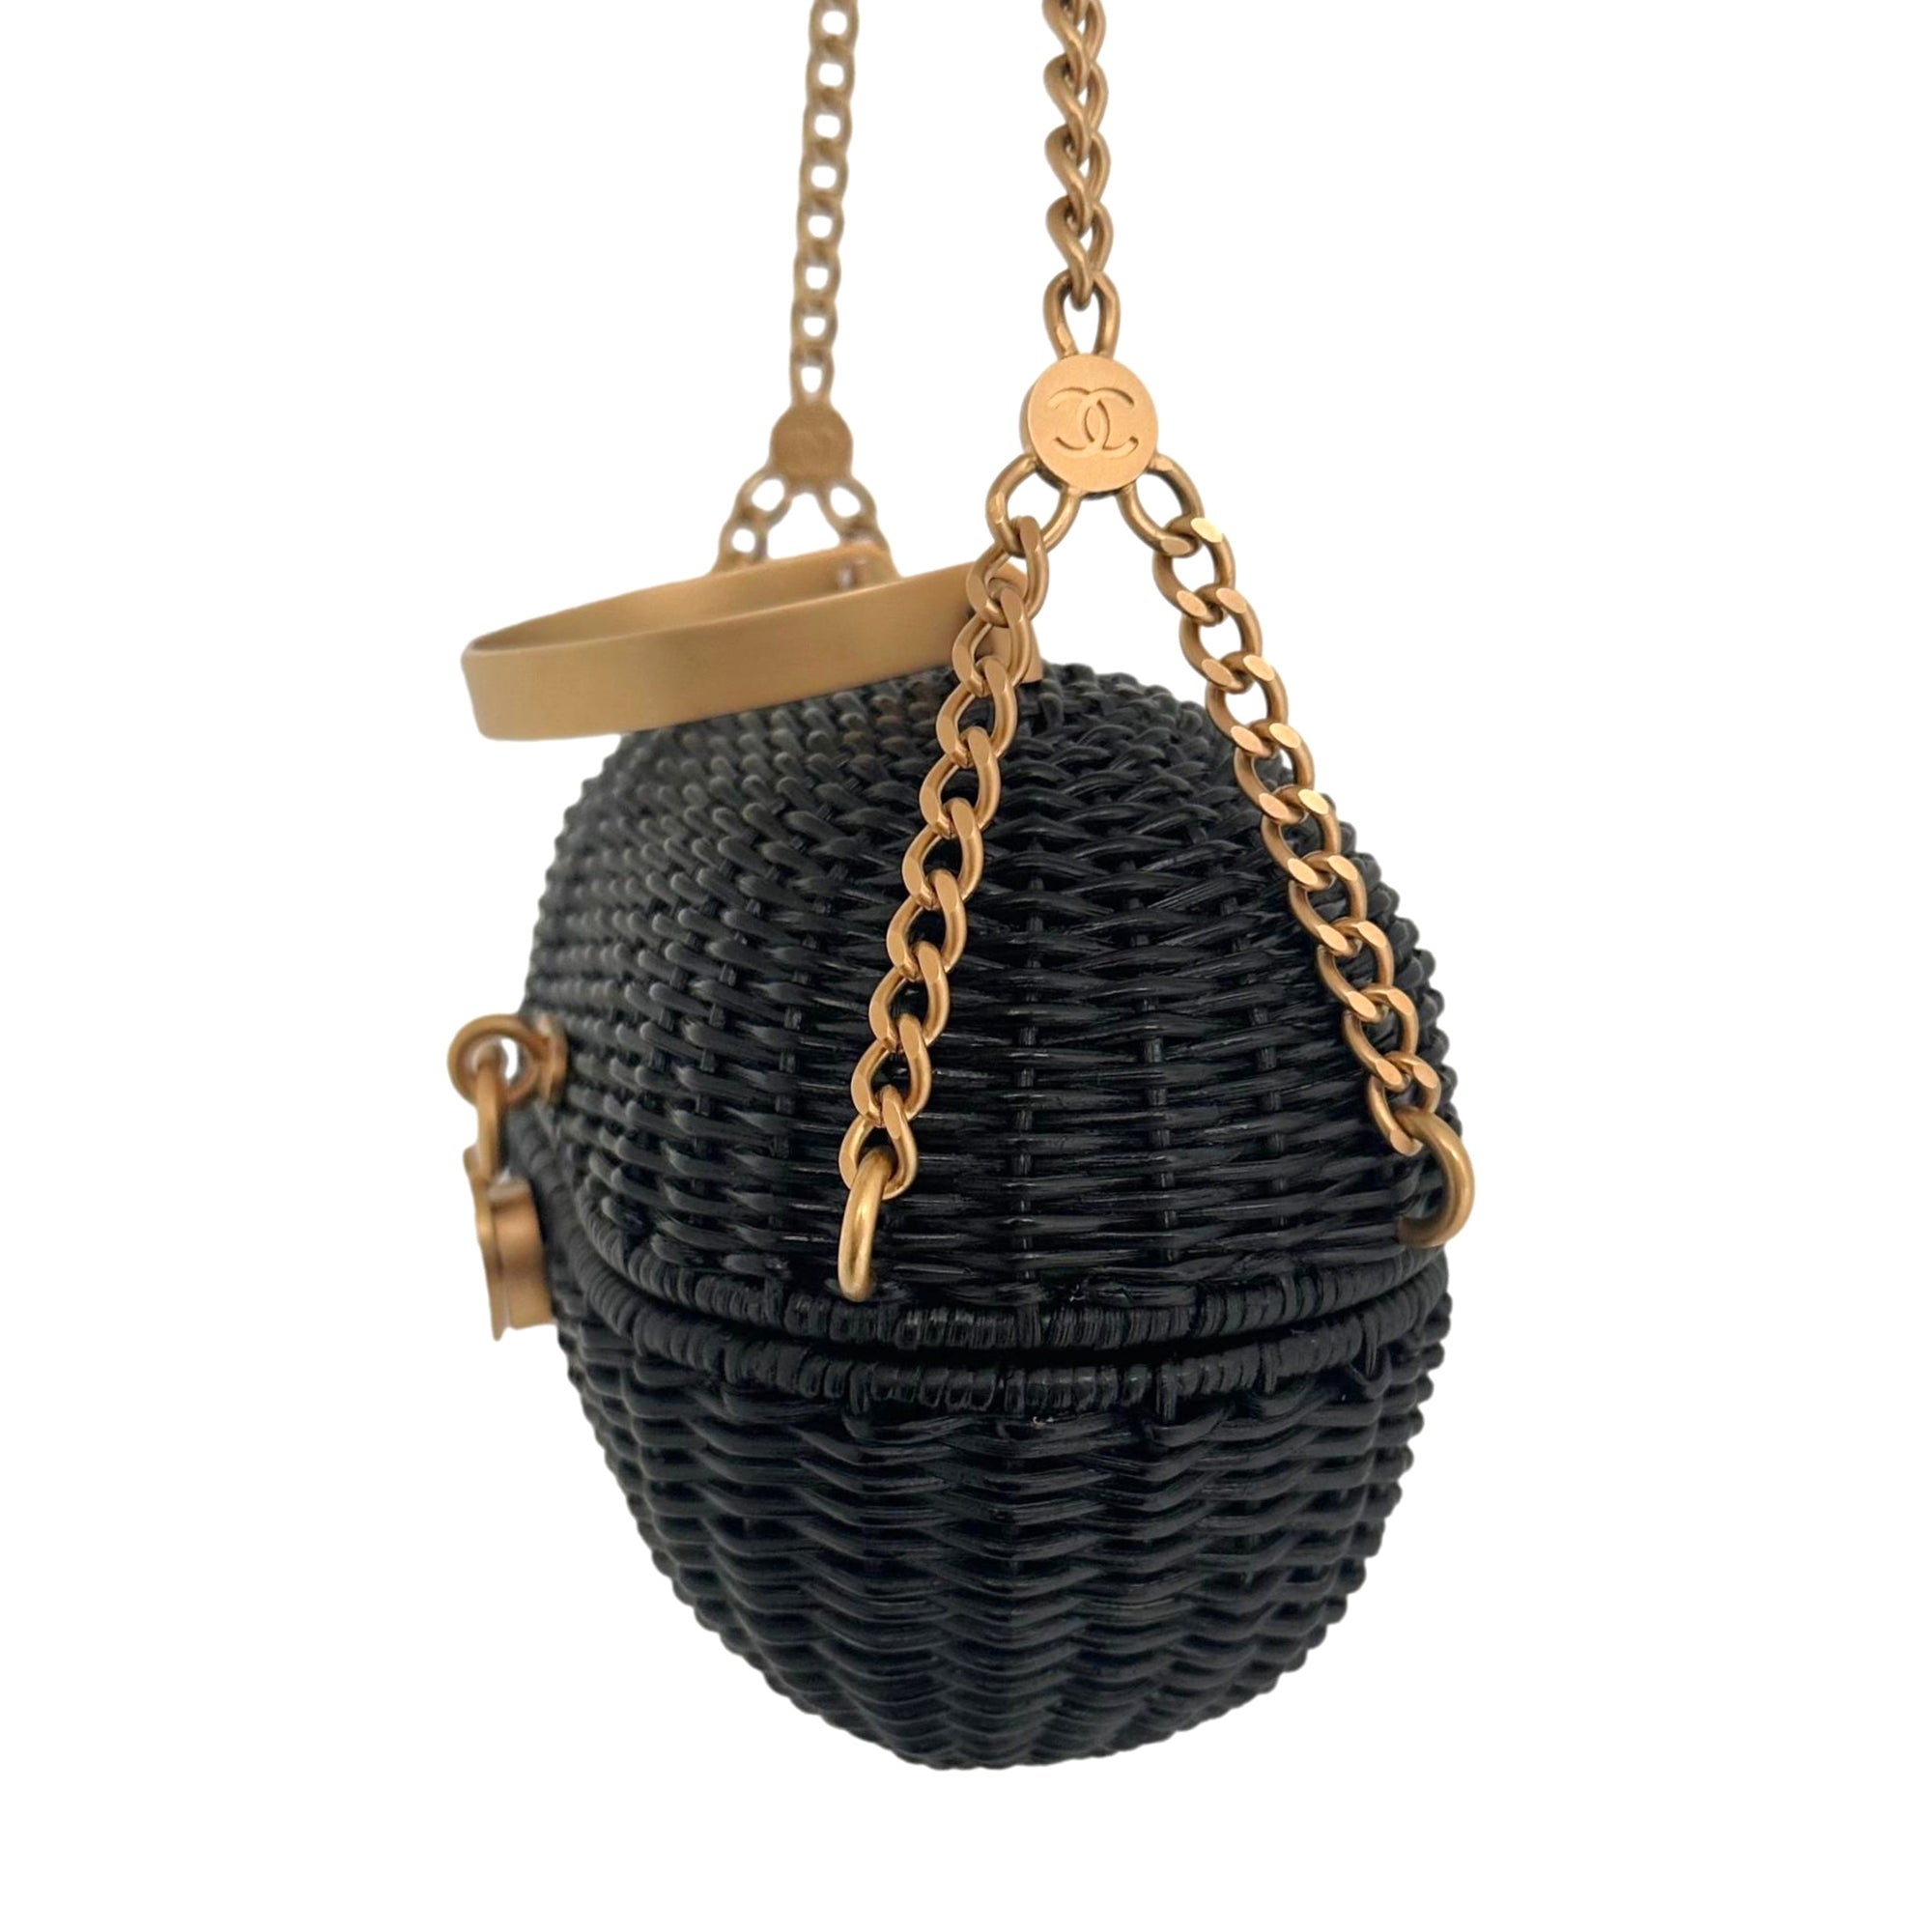 Chanel Black Mini Heart Lock Basket Bag